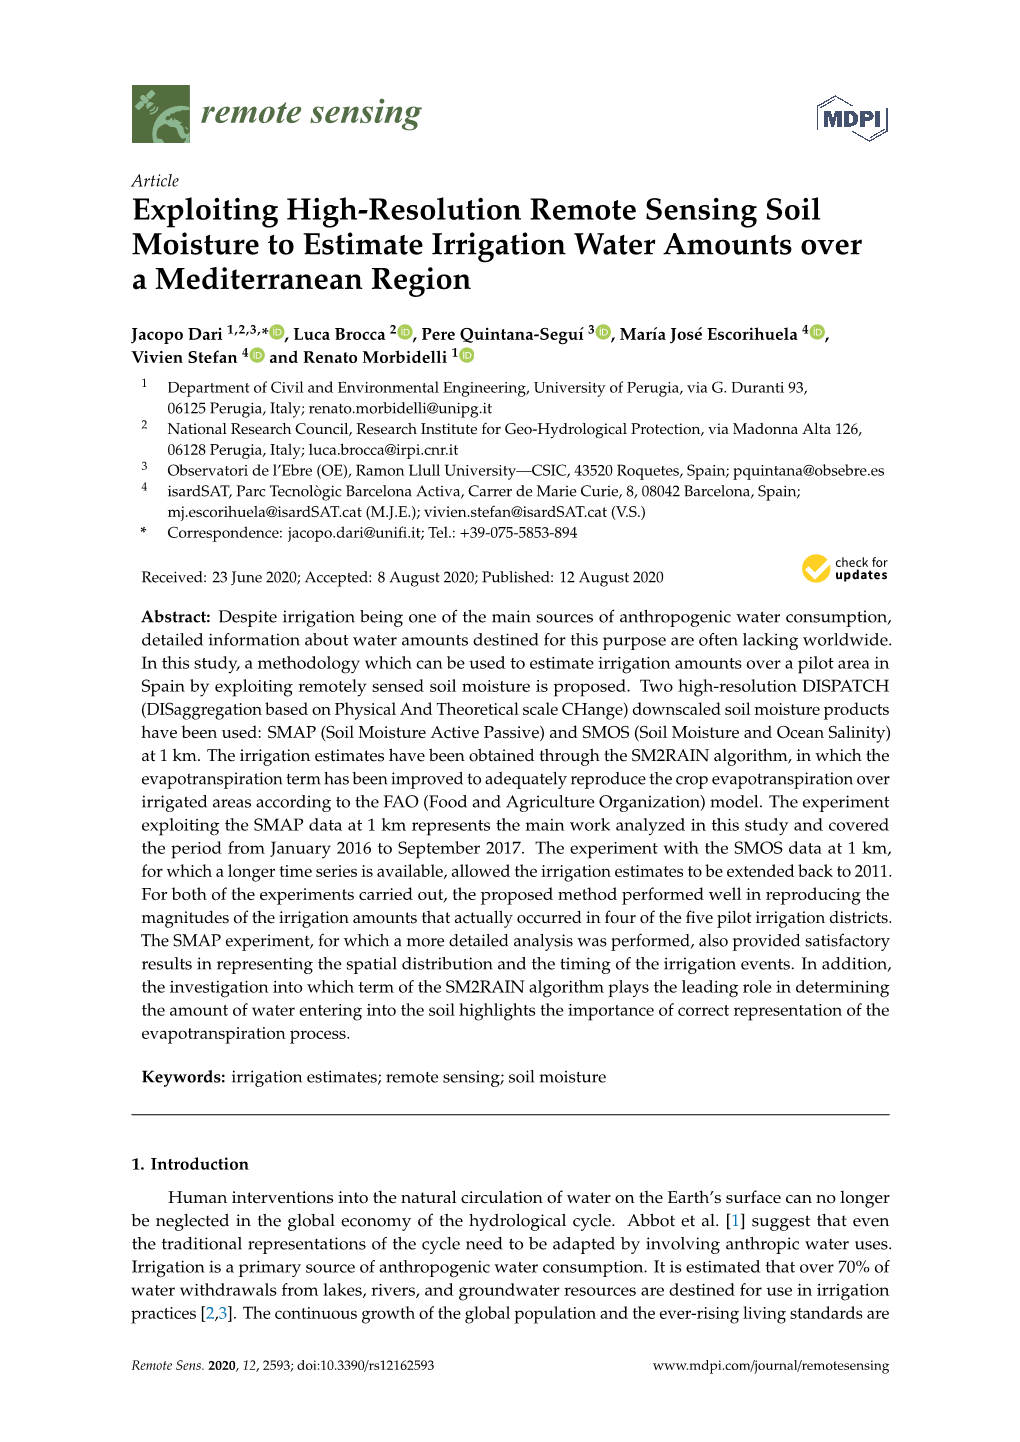 Exploiting High-Resolution Remote Sensing Soil Moisture to Estimate Irrigation Water Amounts Over a Mediterranean Region